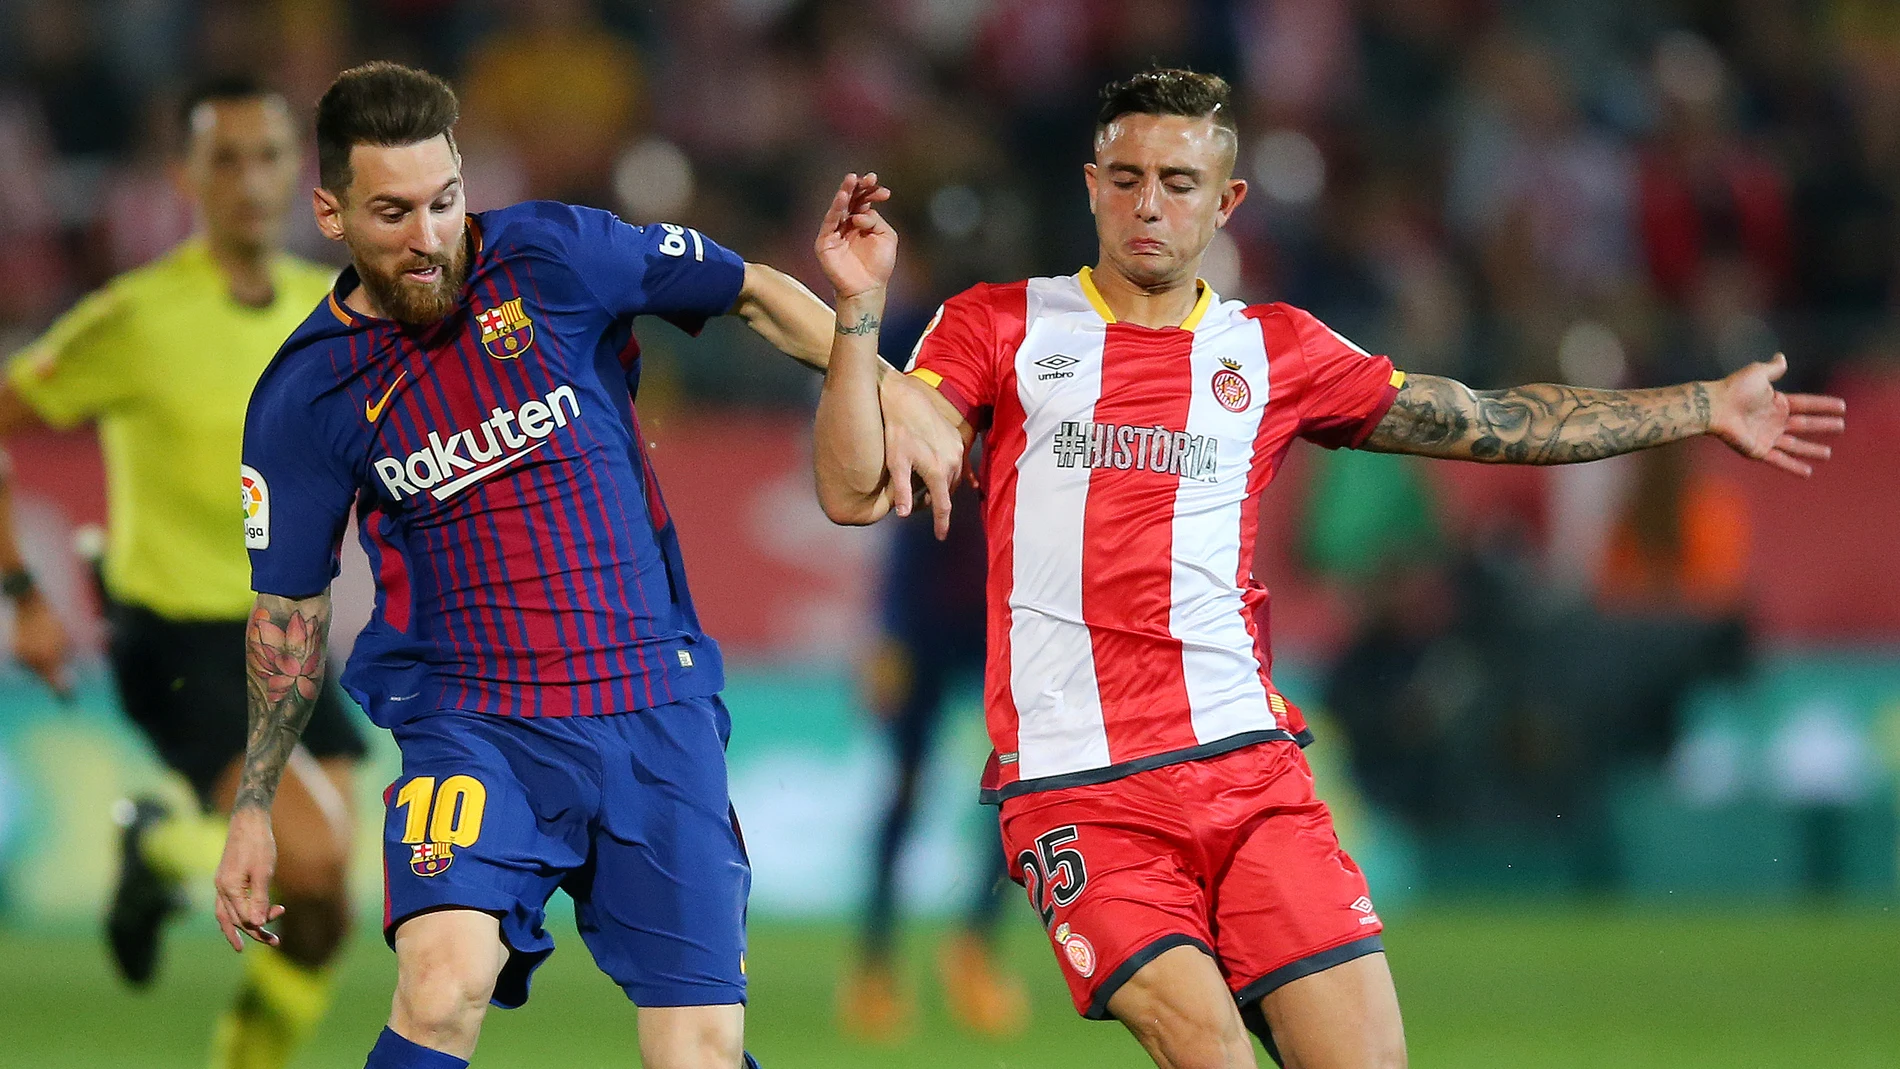 Messi intenta zafarse de Maffeo durante el Girona - Barça